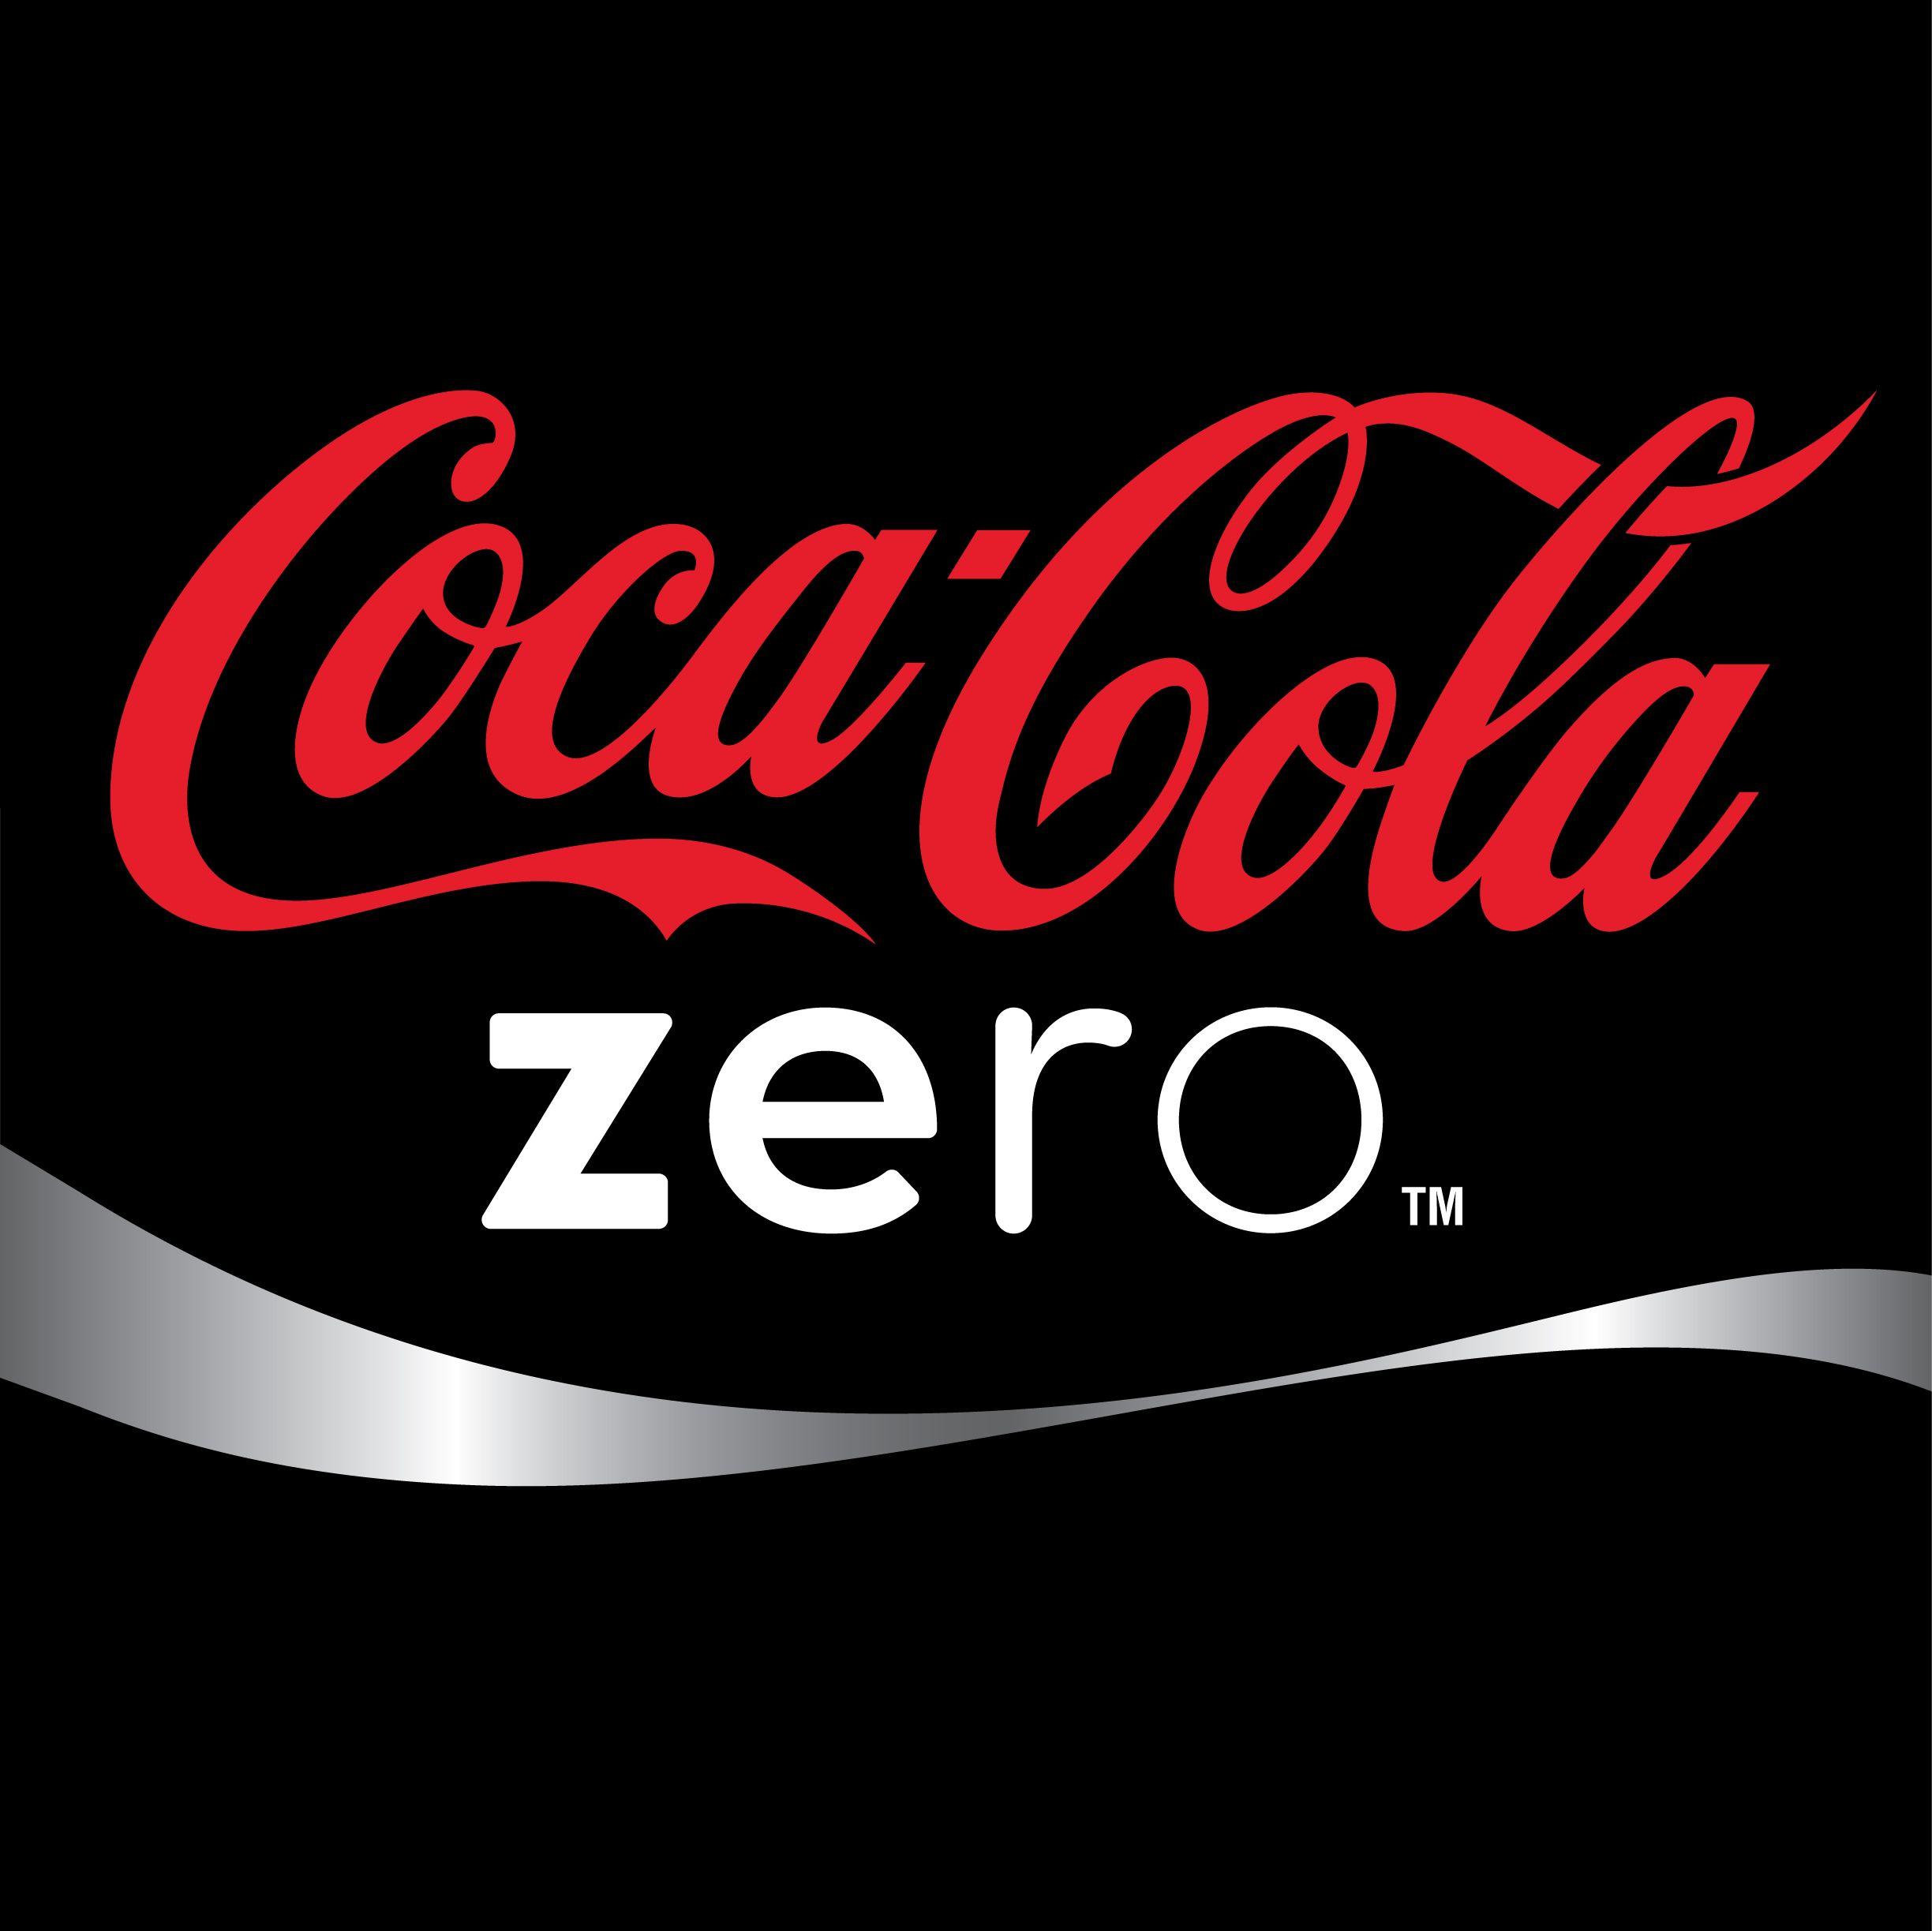 Coca-Cola Zero Logo - Coca Cola Zero | De Atmosfeer